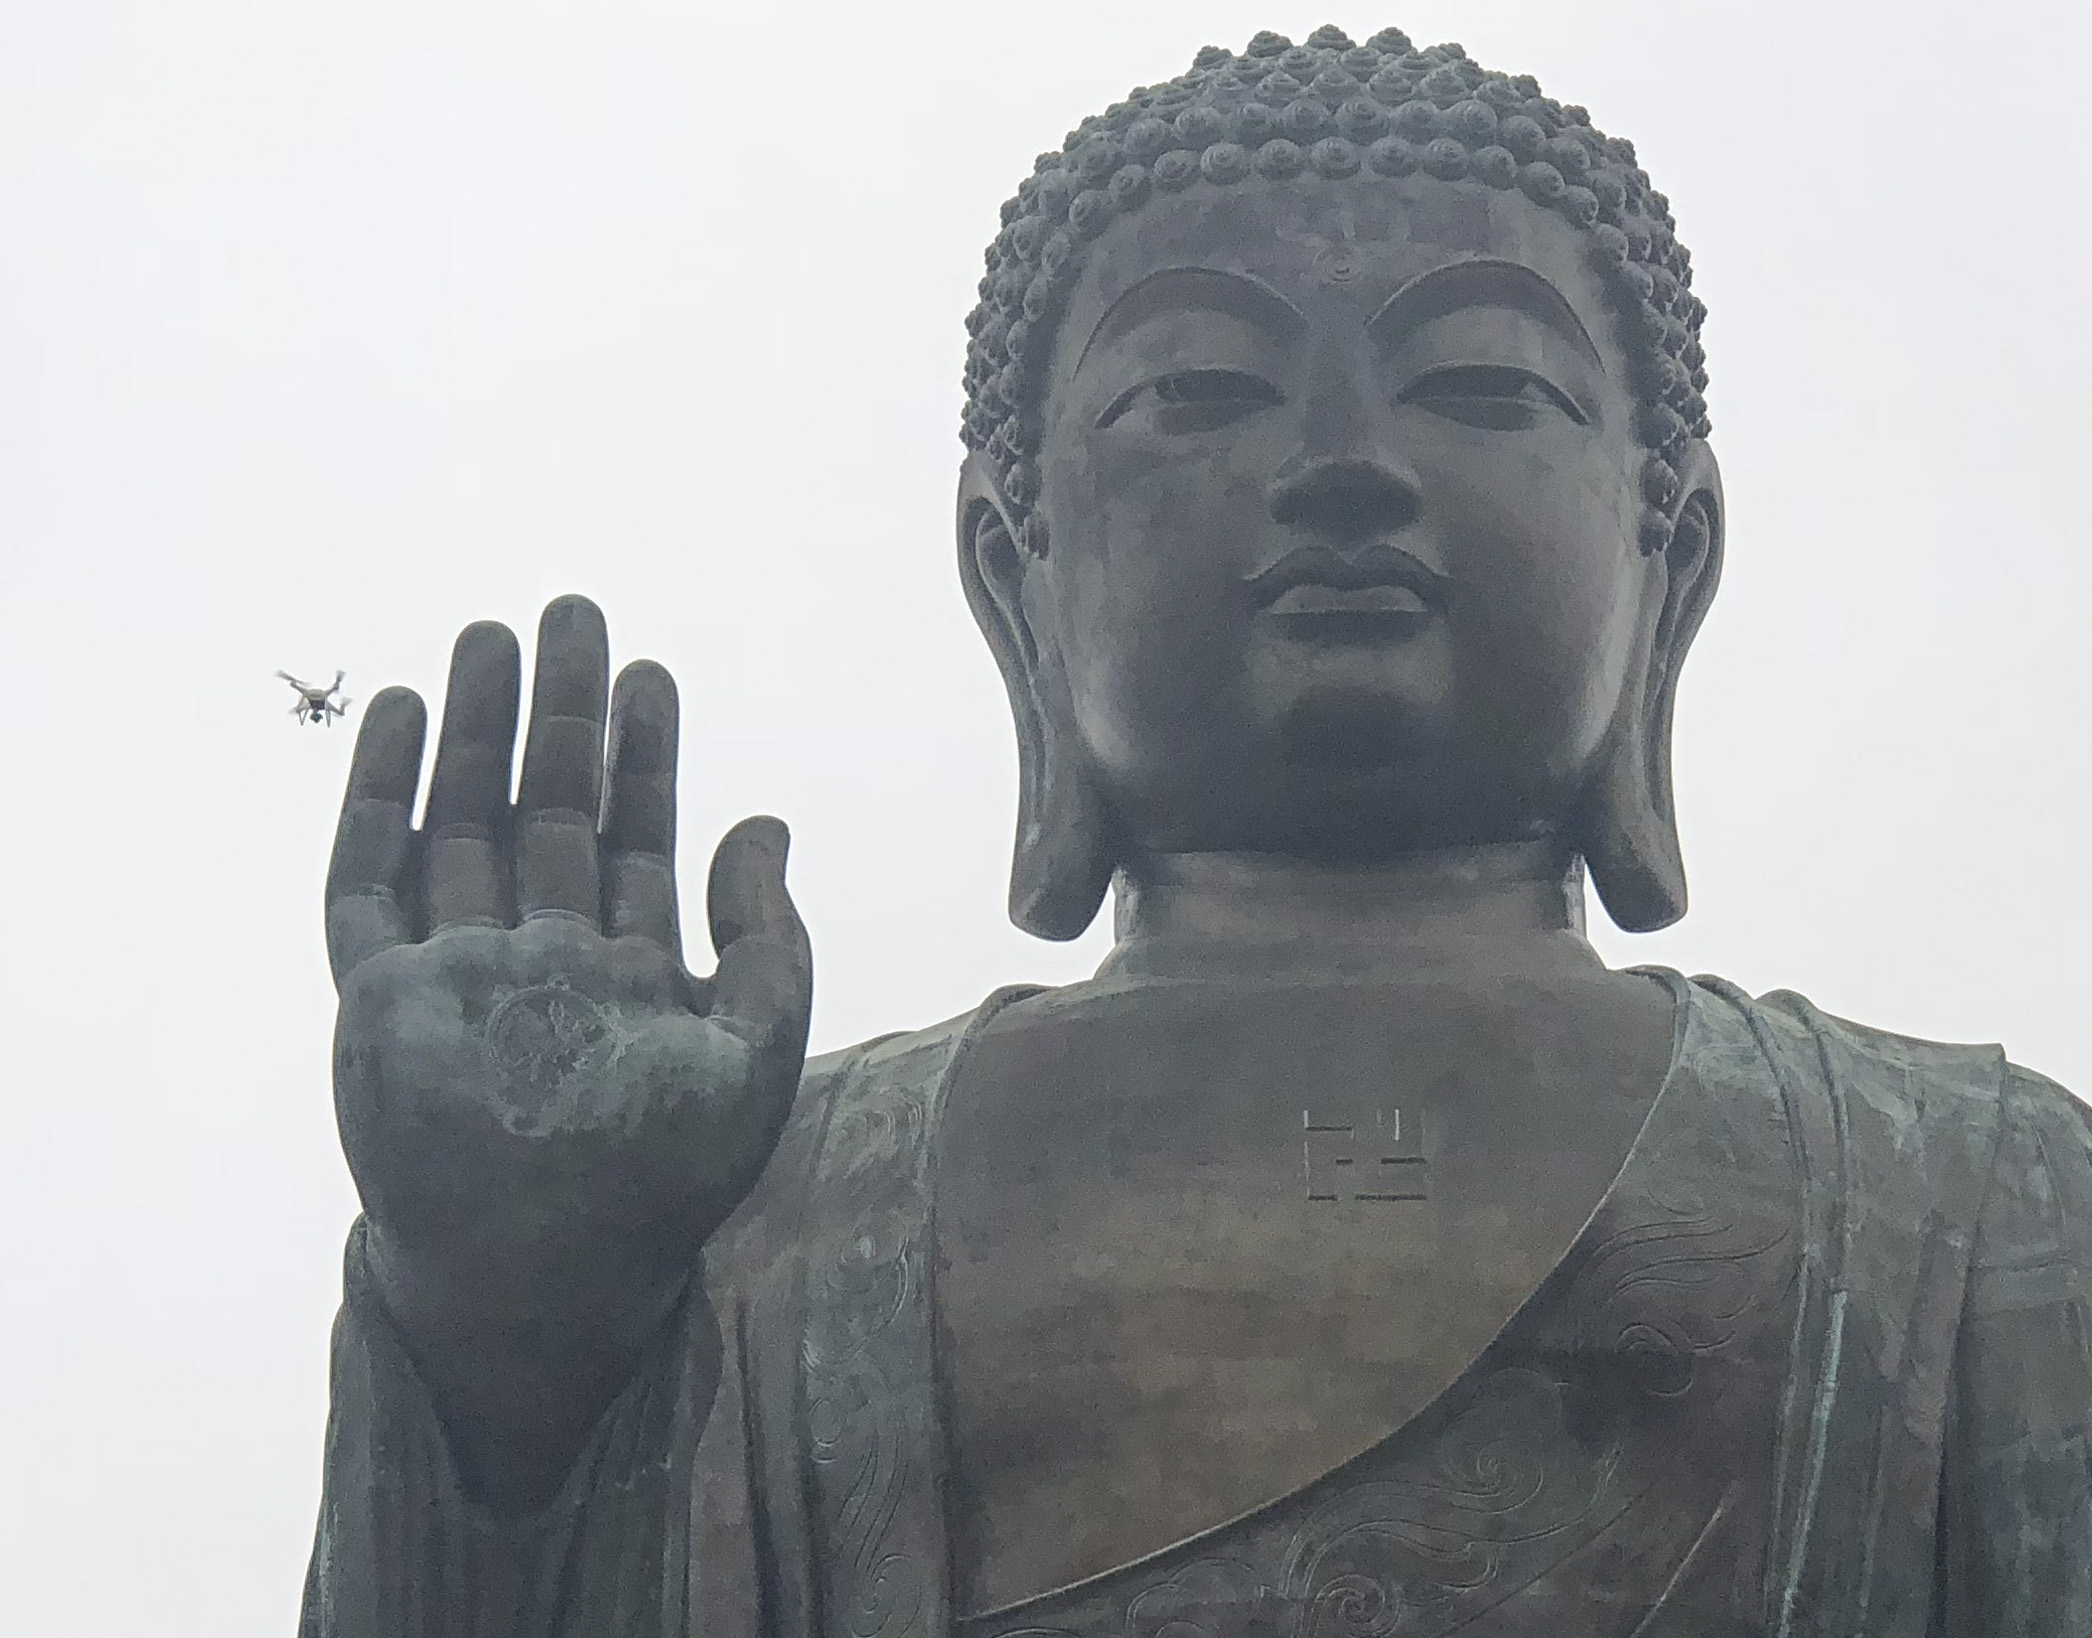 HK, Buddha and drone